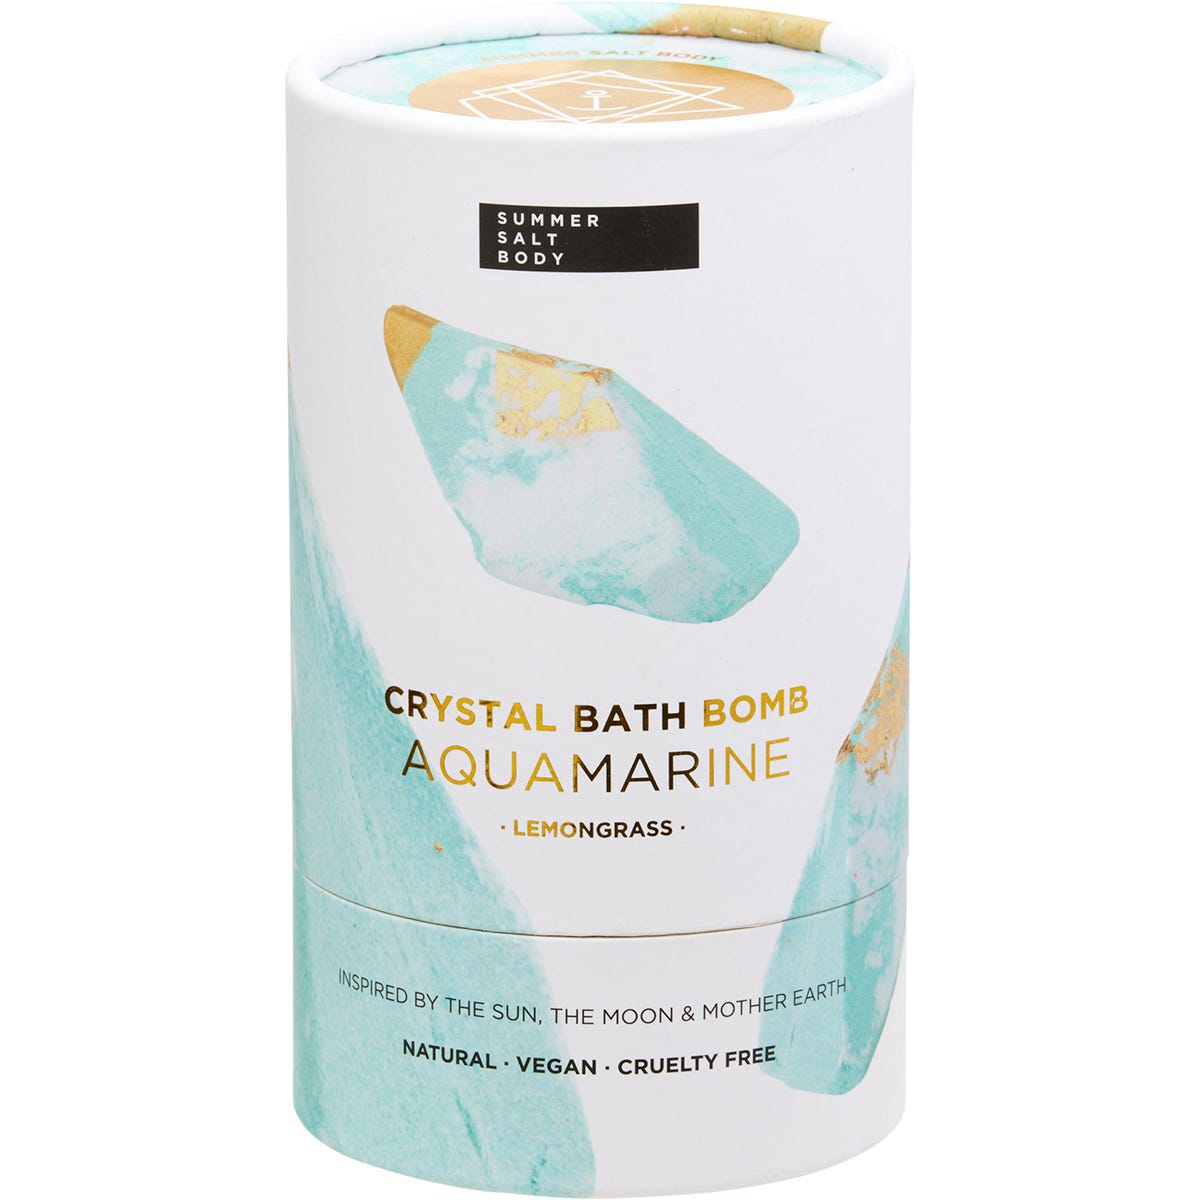 Summer Salt Body Crystal Bath Bomb Aquamarine Lemongrass